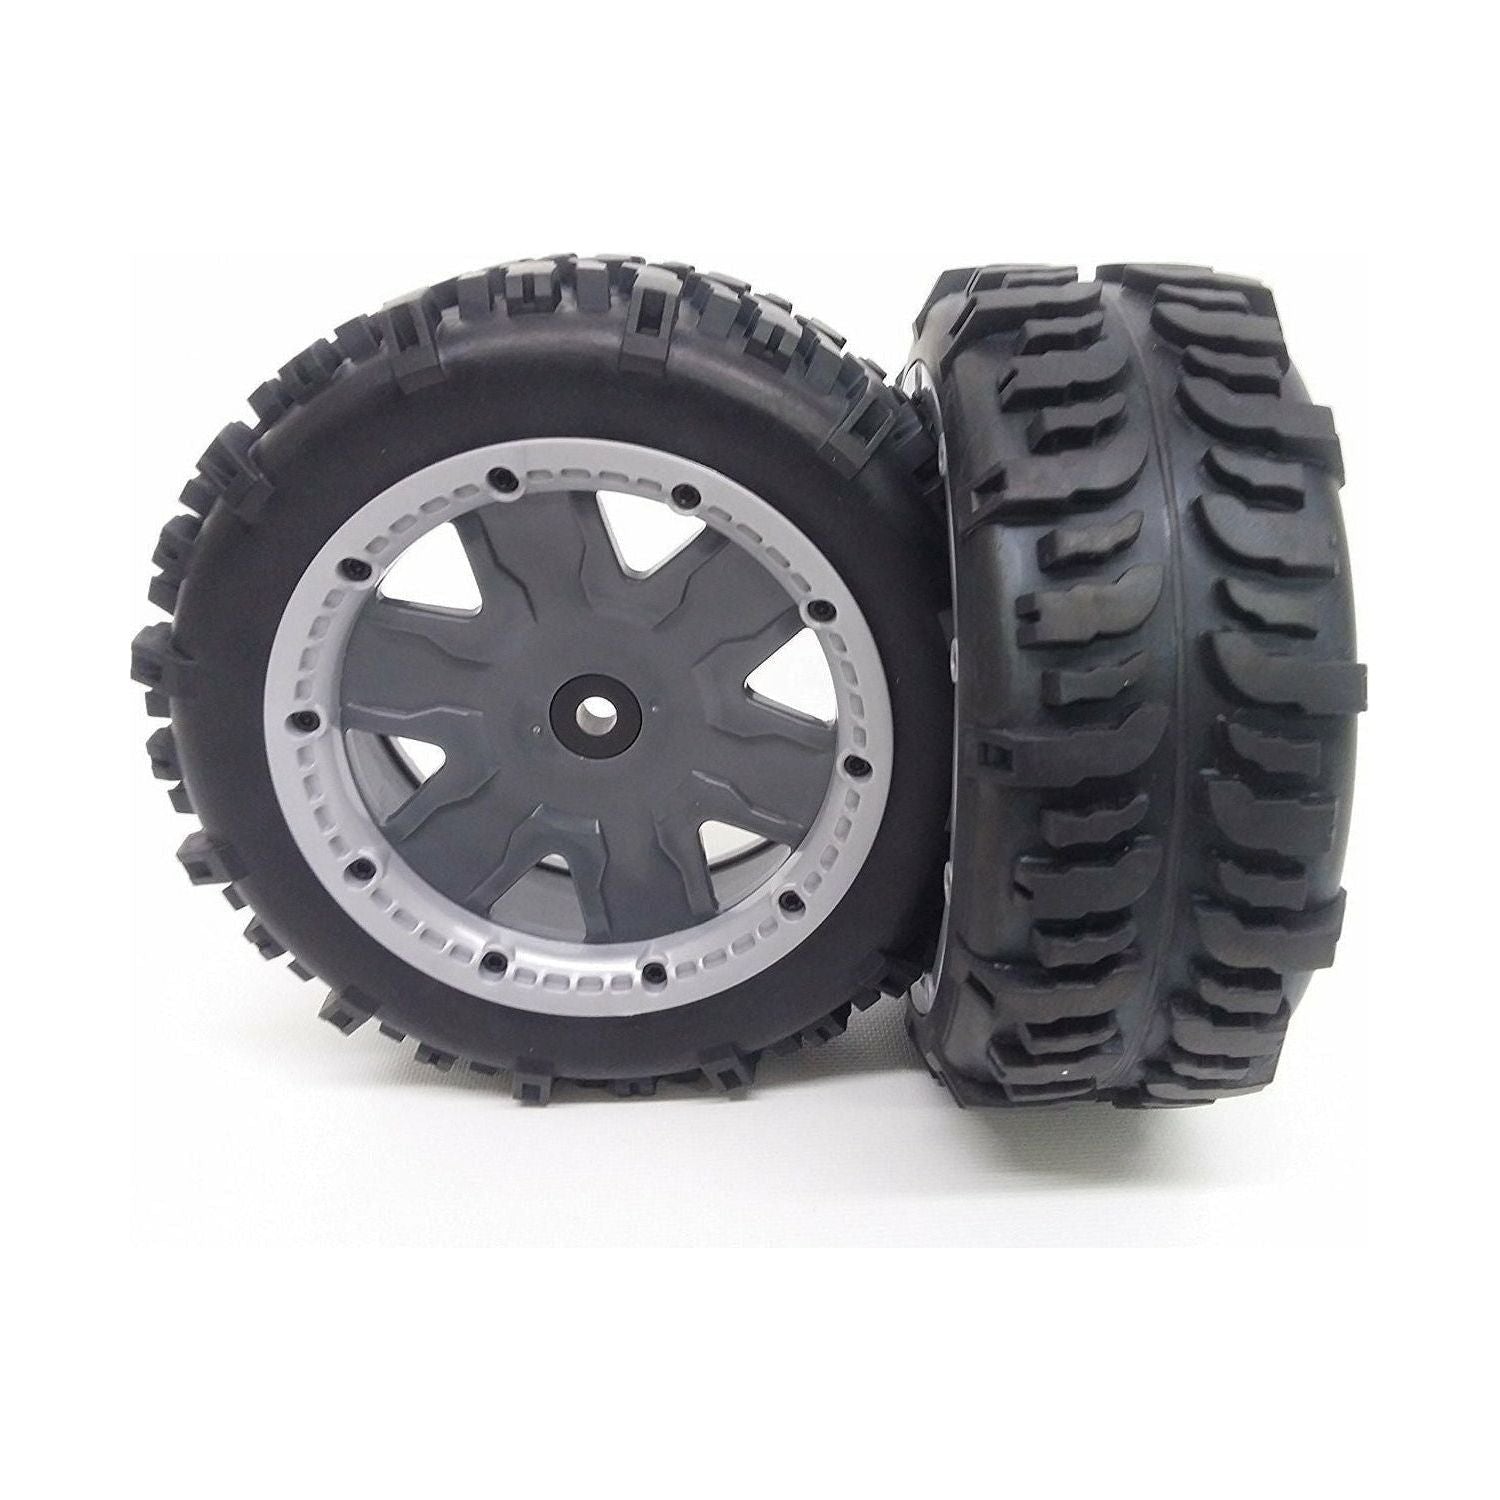 Swamp Dawg Tires & Yuma Rims with Beadlocks - Front (1 Pair) (Choose Color)